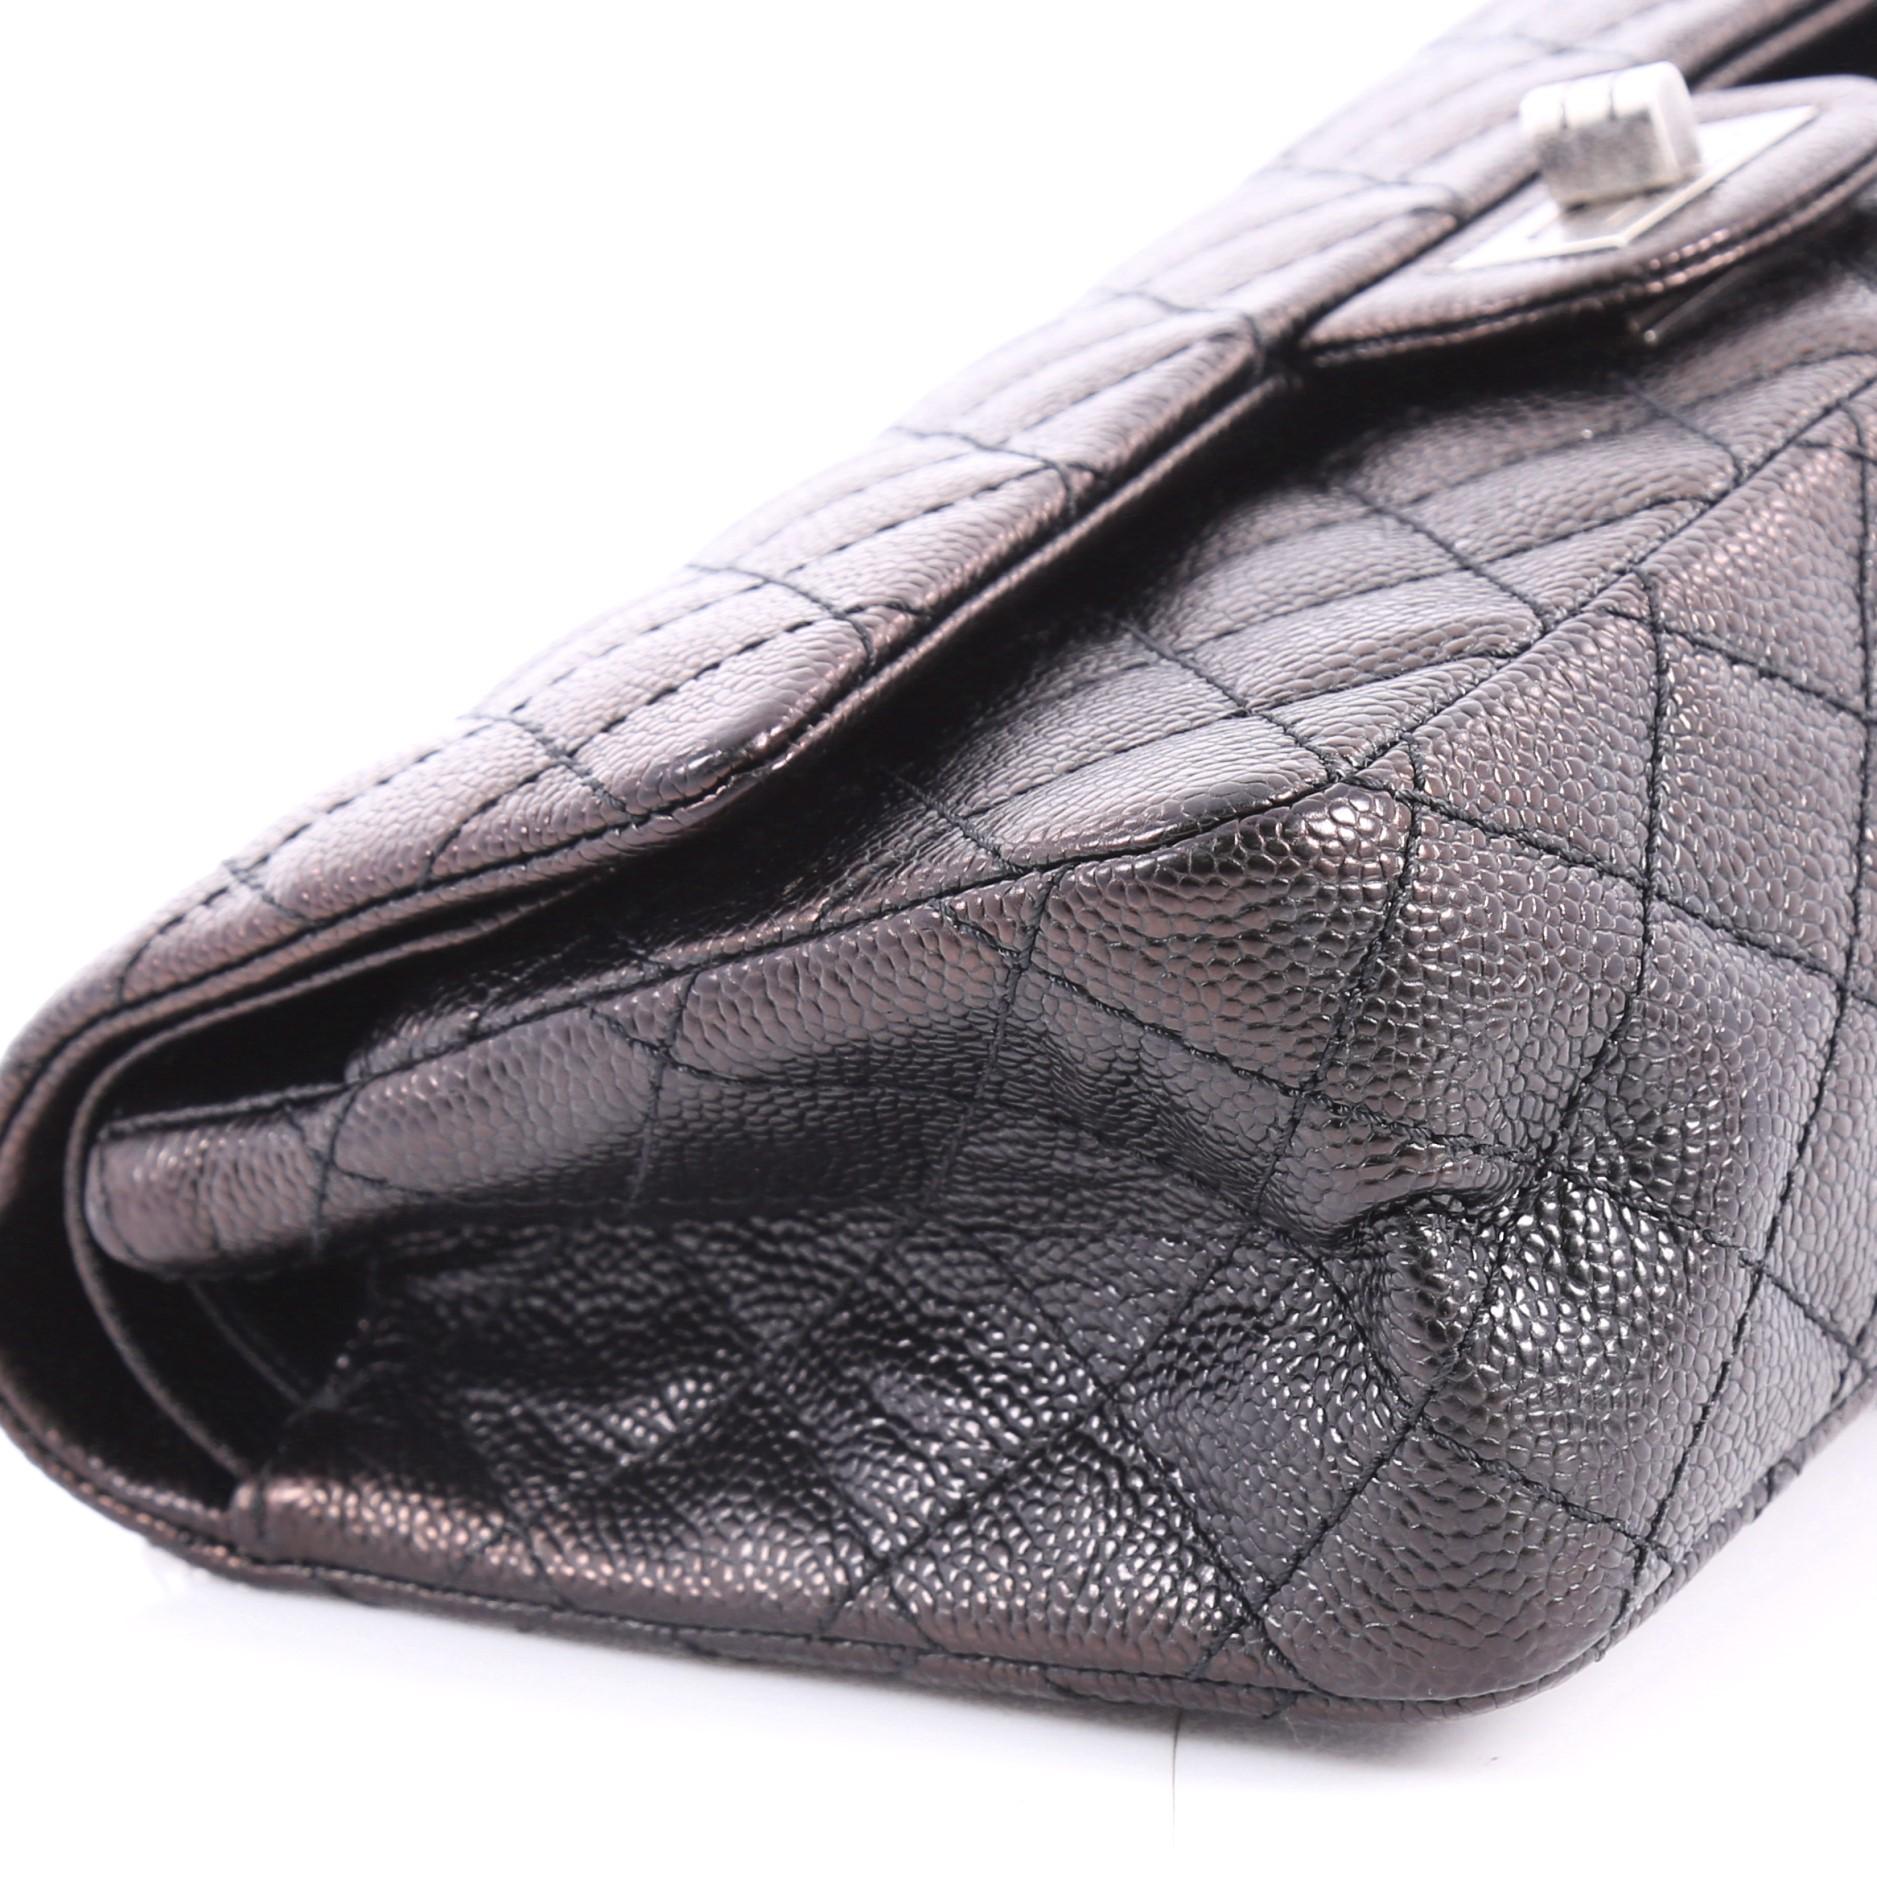 Chanel Reissue 2.55 Handbag Quilted Caviar 225 1